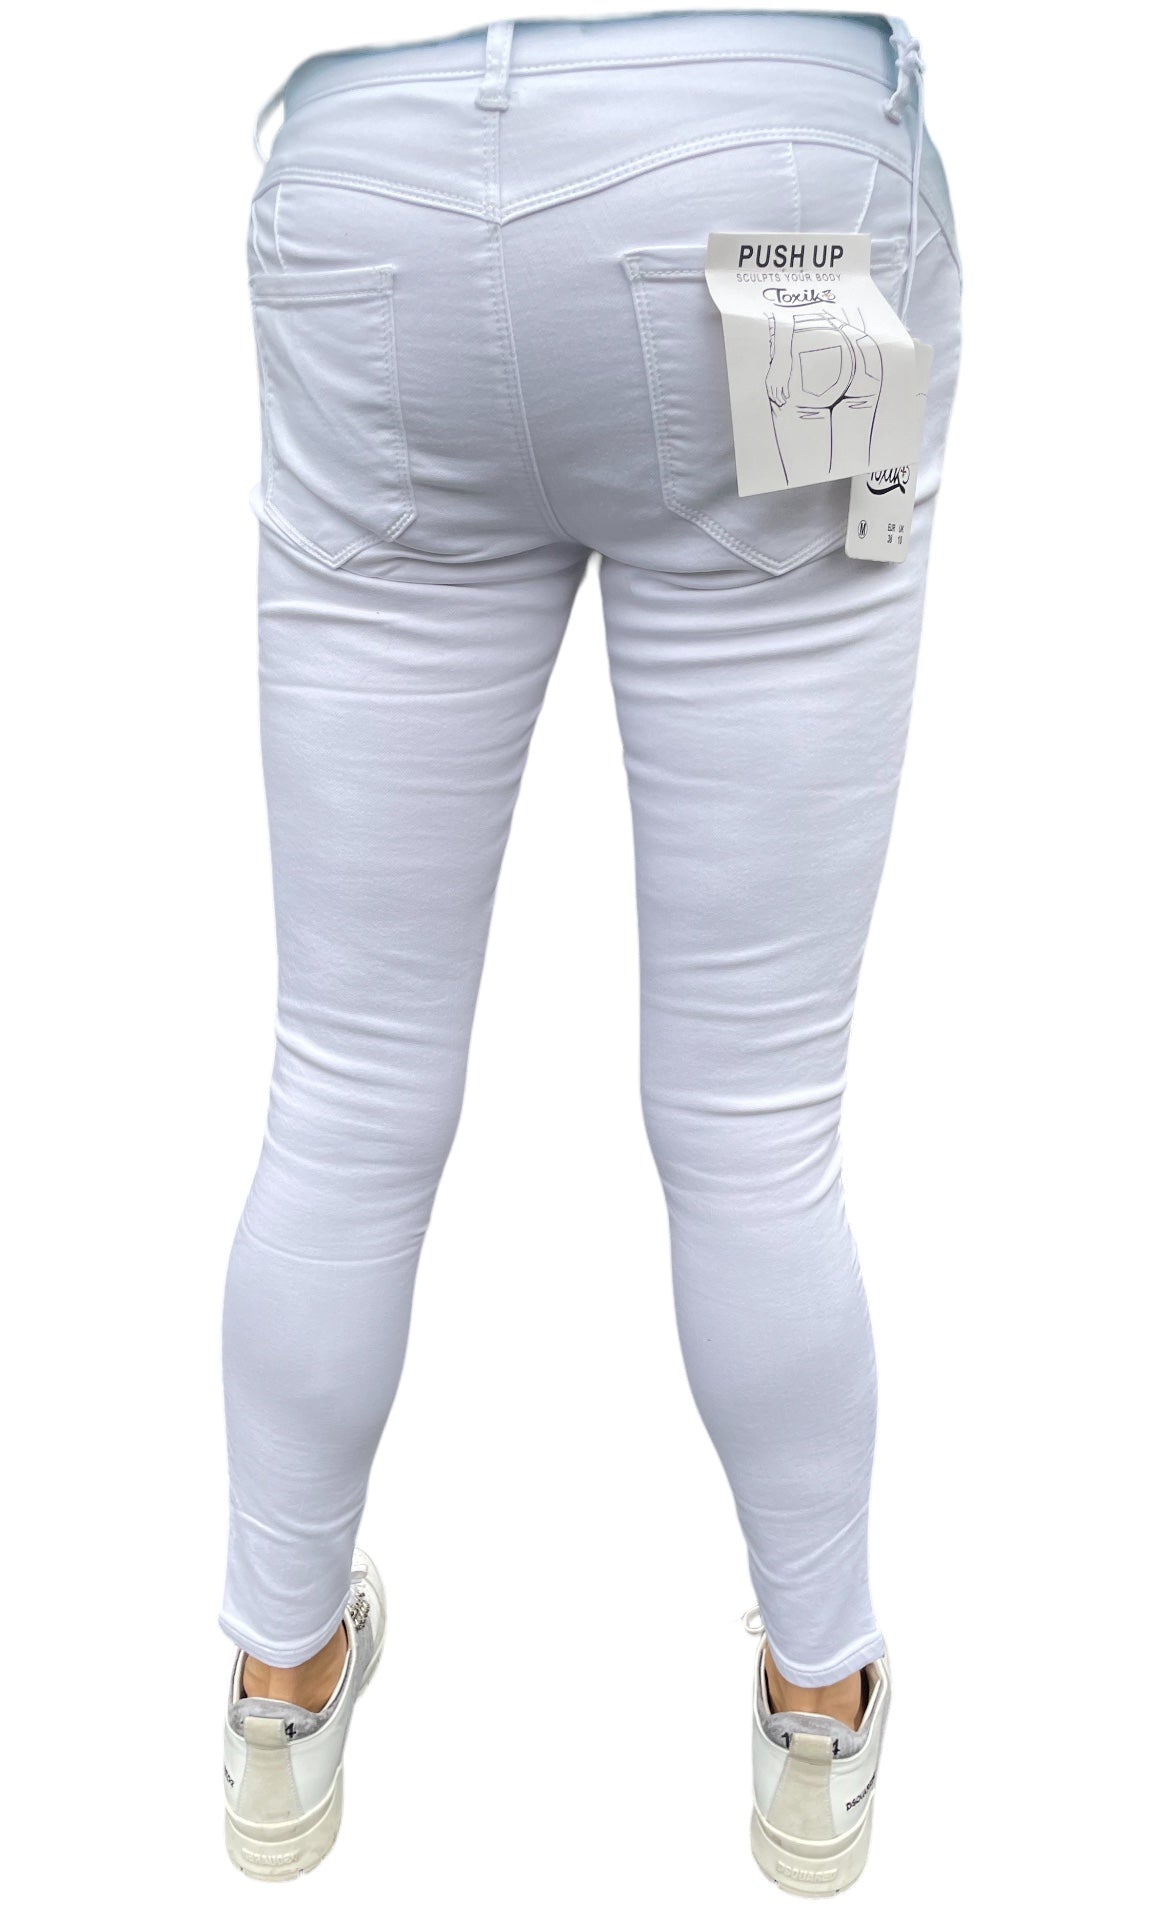 White Skinny jeans toxik Push-up